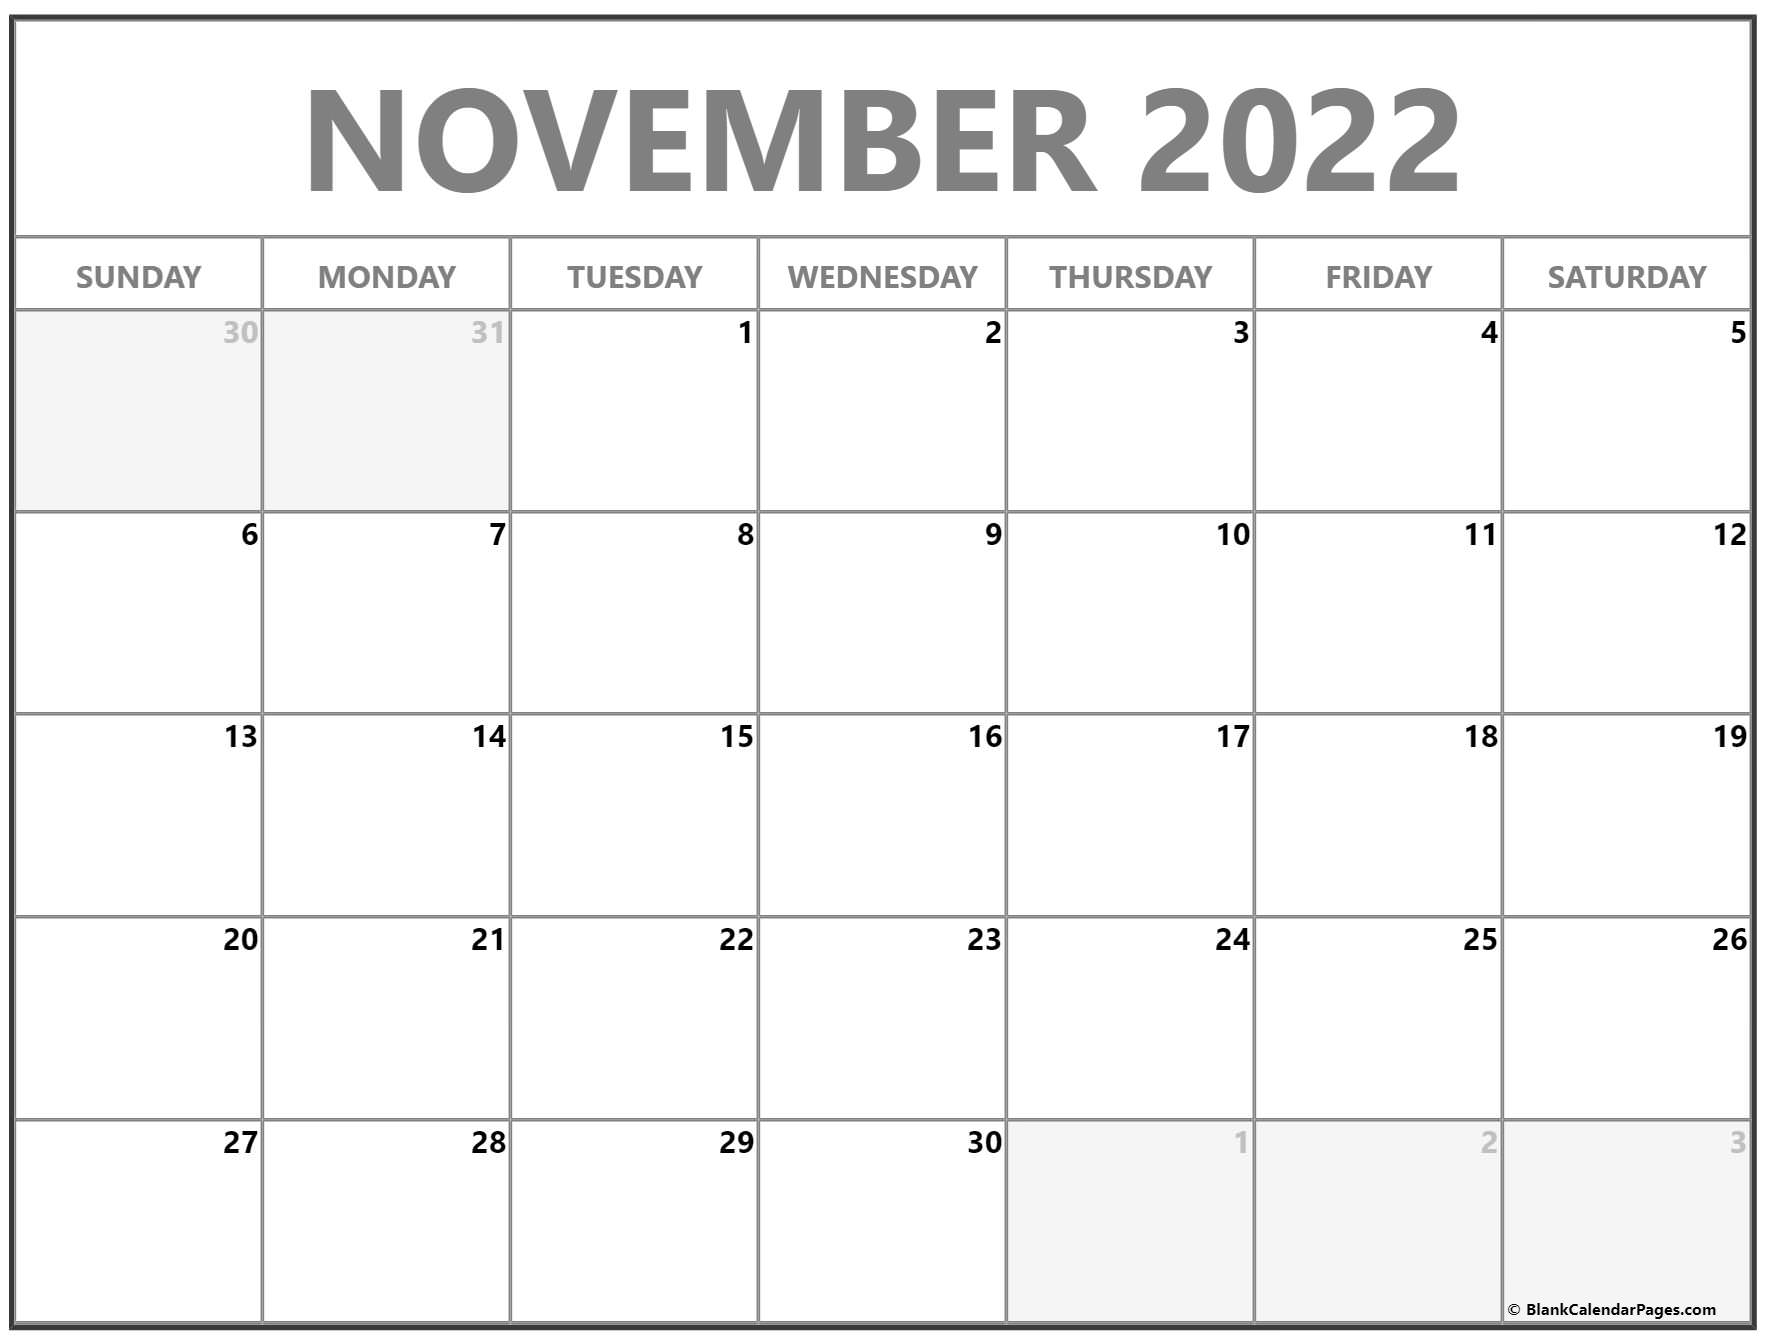 Free Blank Calendar Template November 2022 2023 - FreeBlankCalendar.com